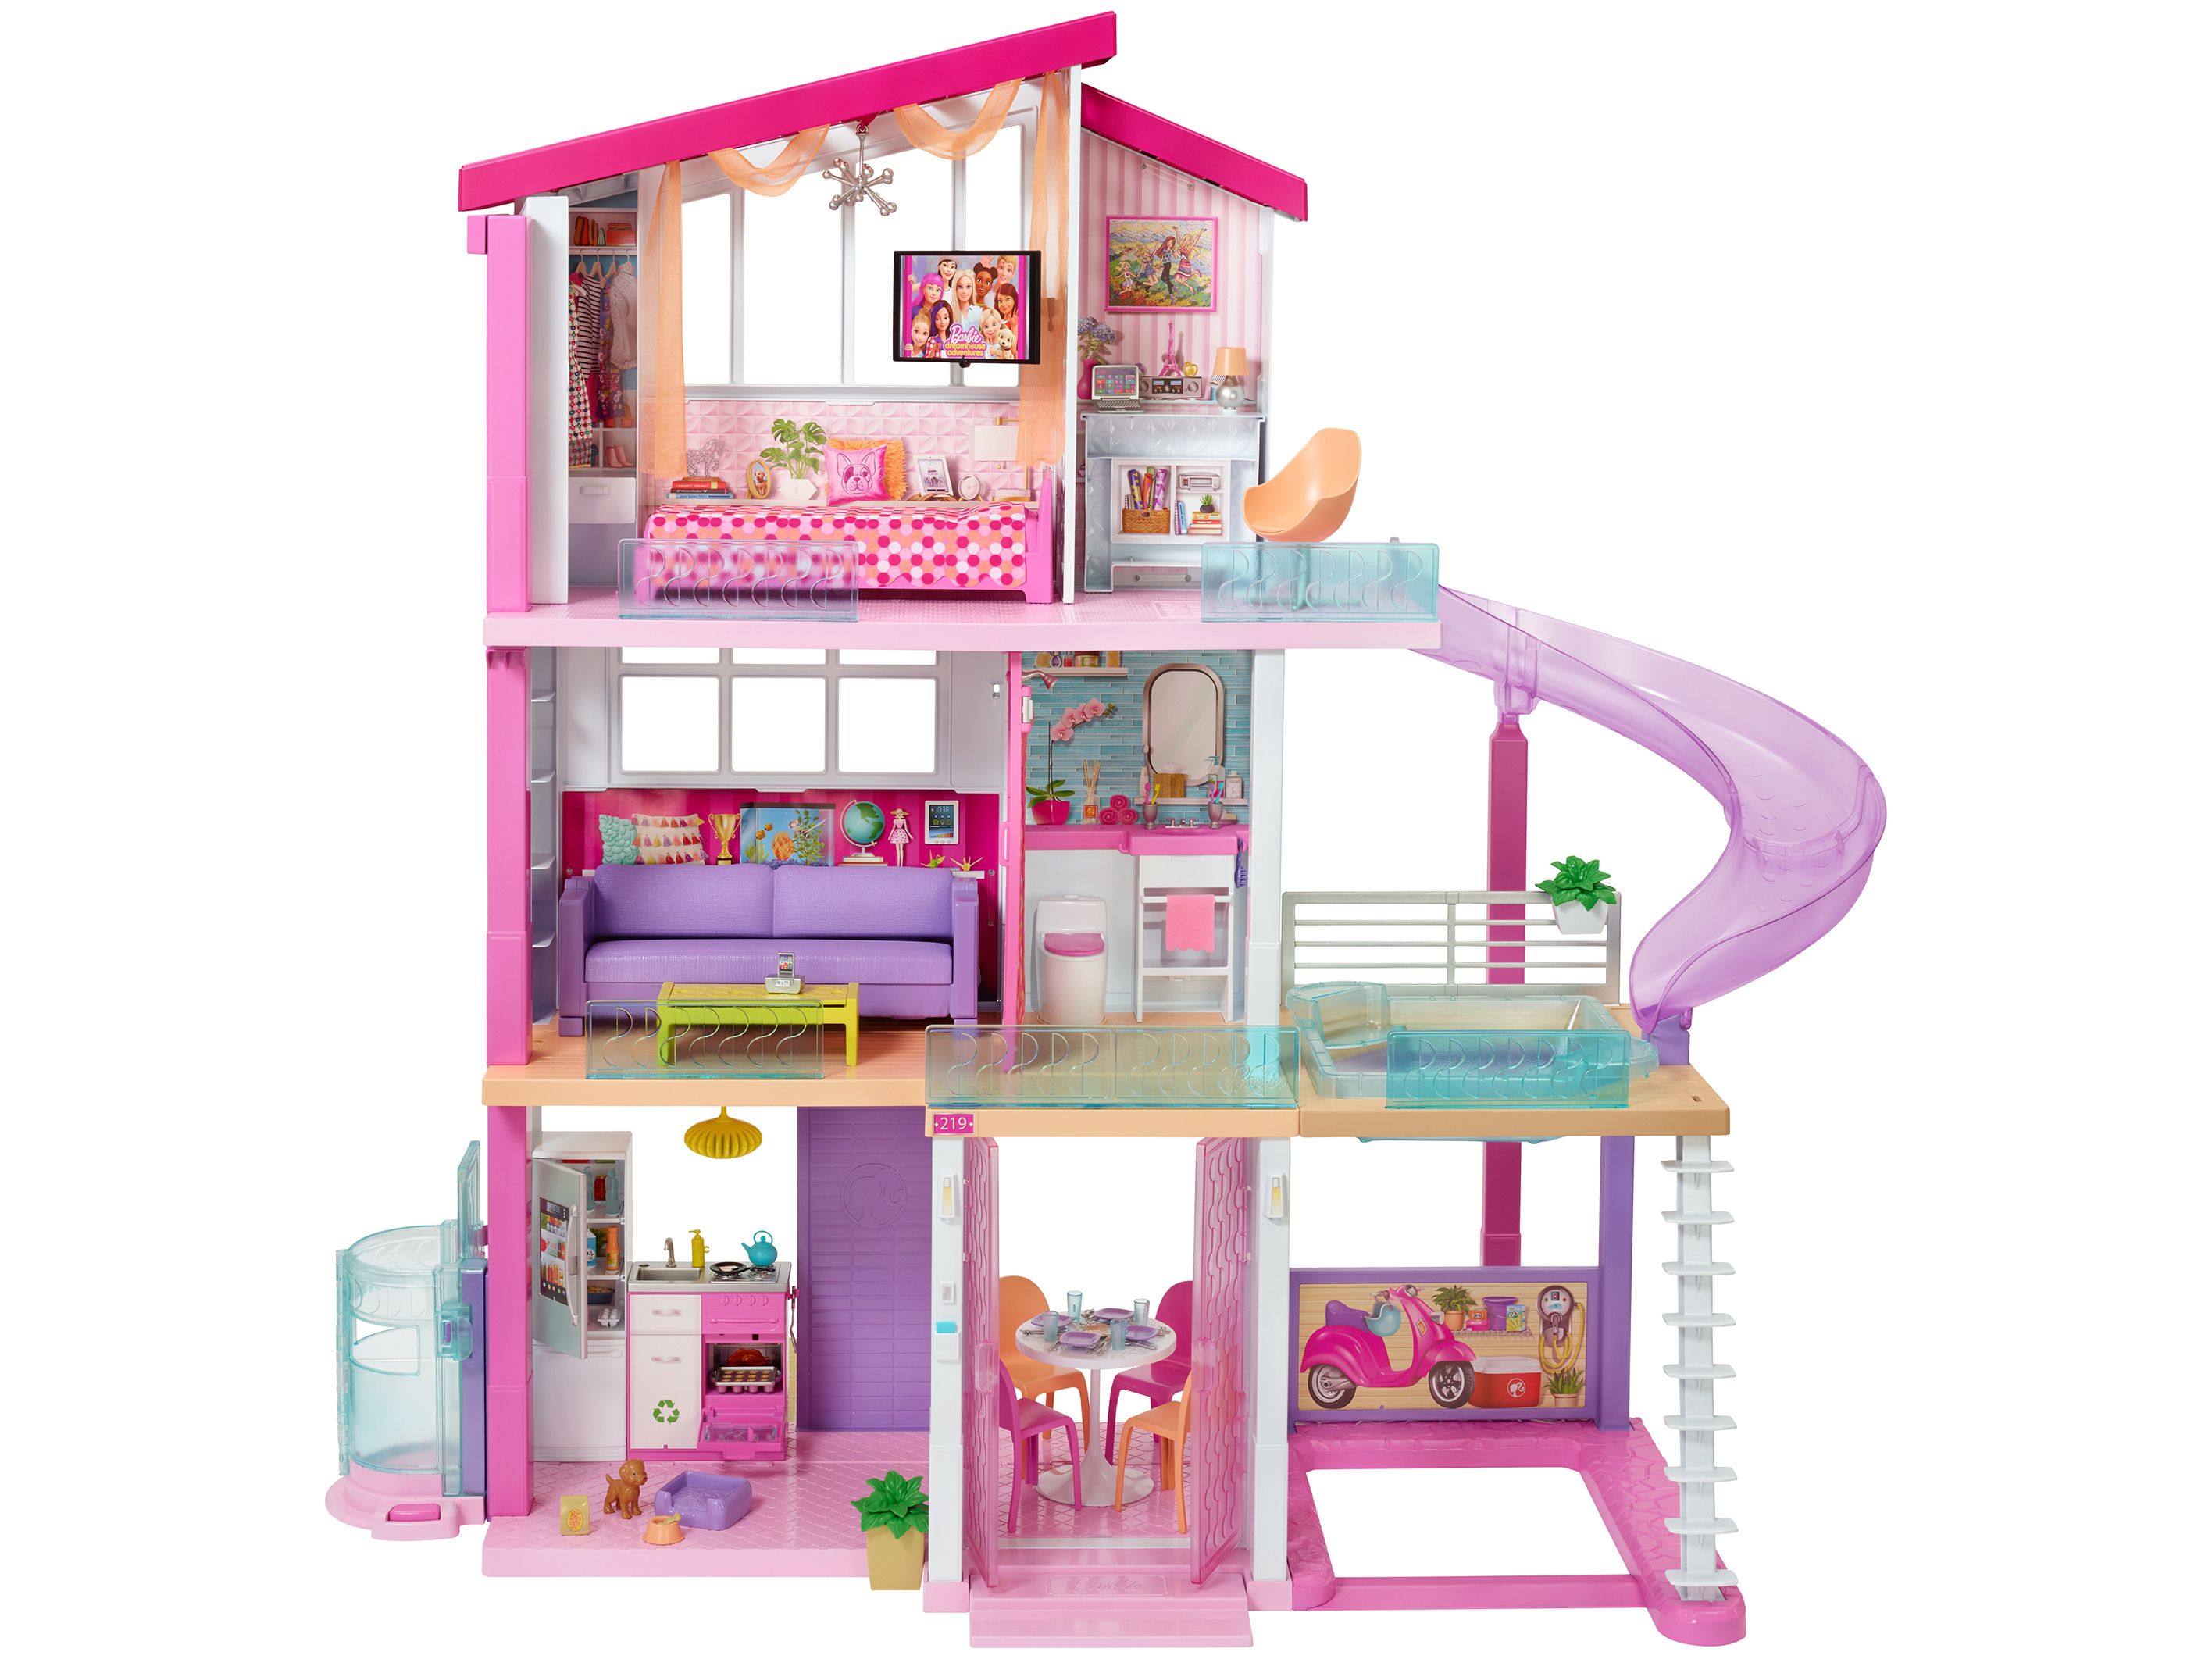 You rent Barbie's Malibu Dreamhouse $60 night | CNN